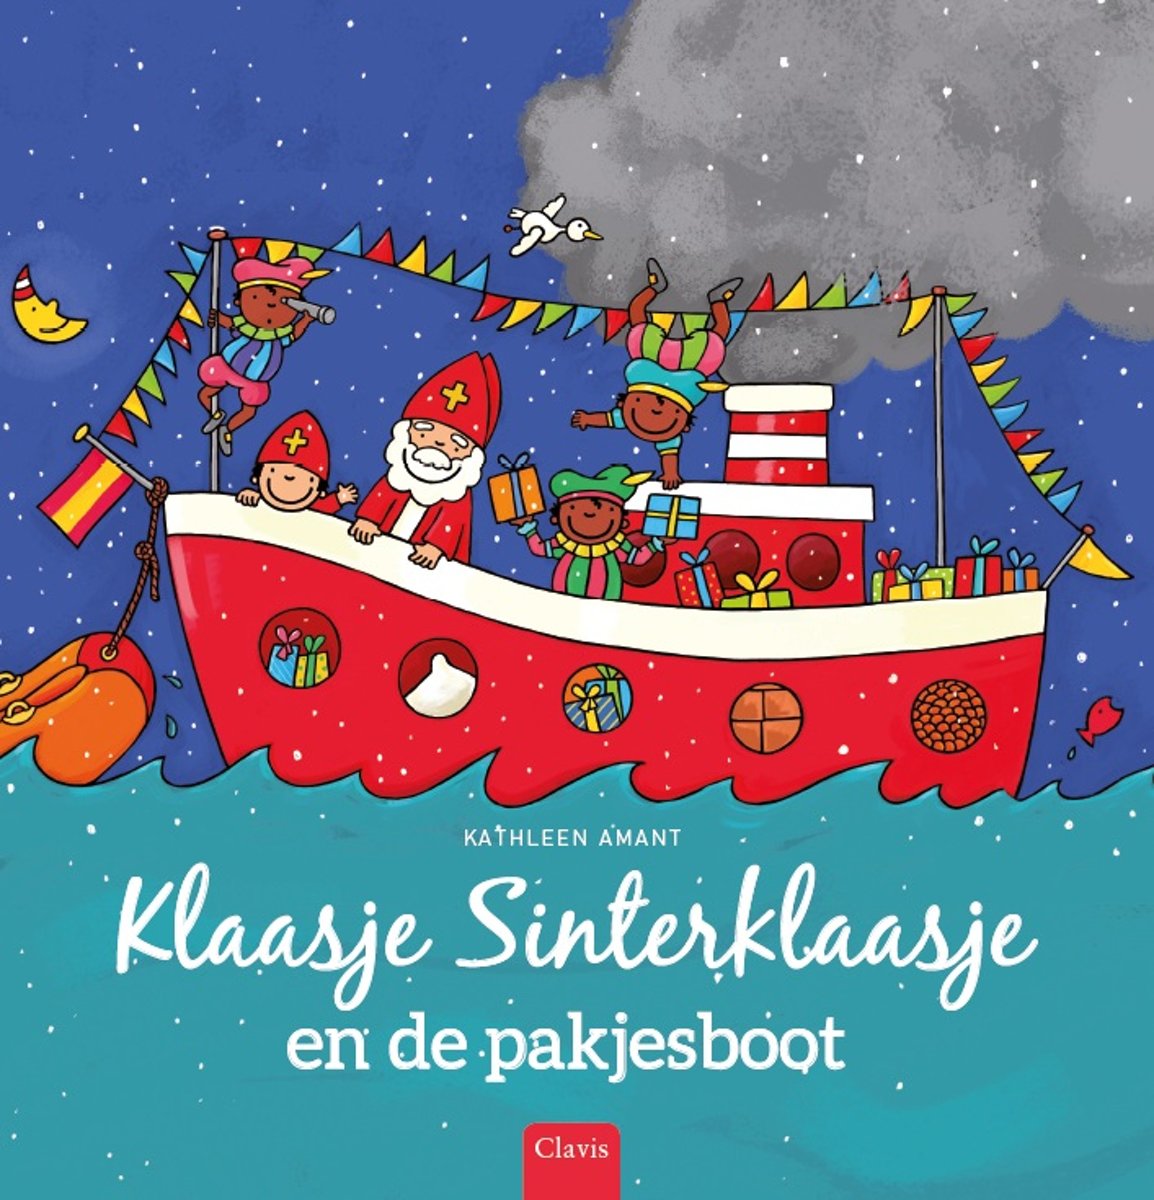 Je bekijkt nu Boekentip: Klaasje Sinterklaas en de pakjesboot